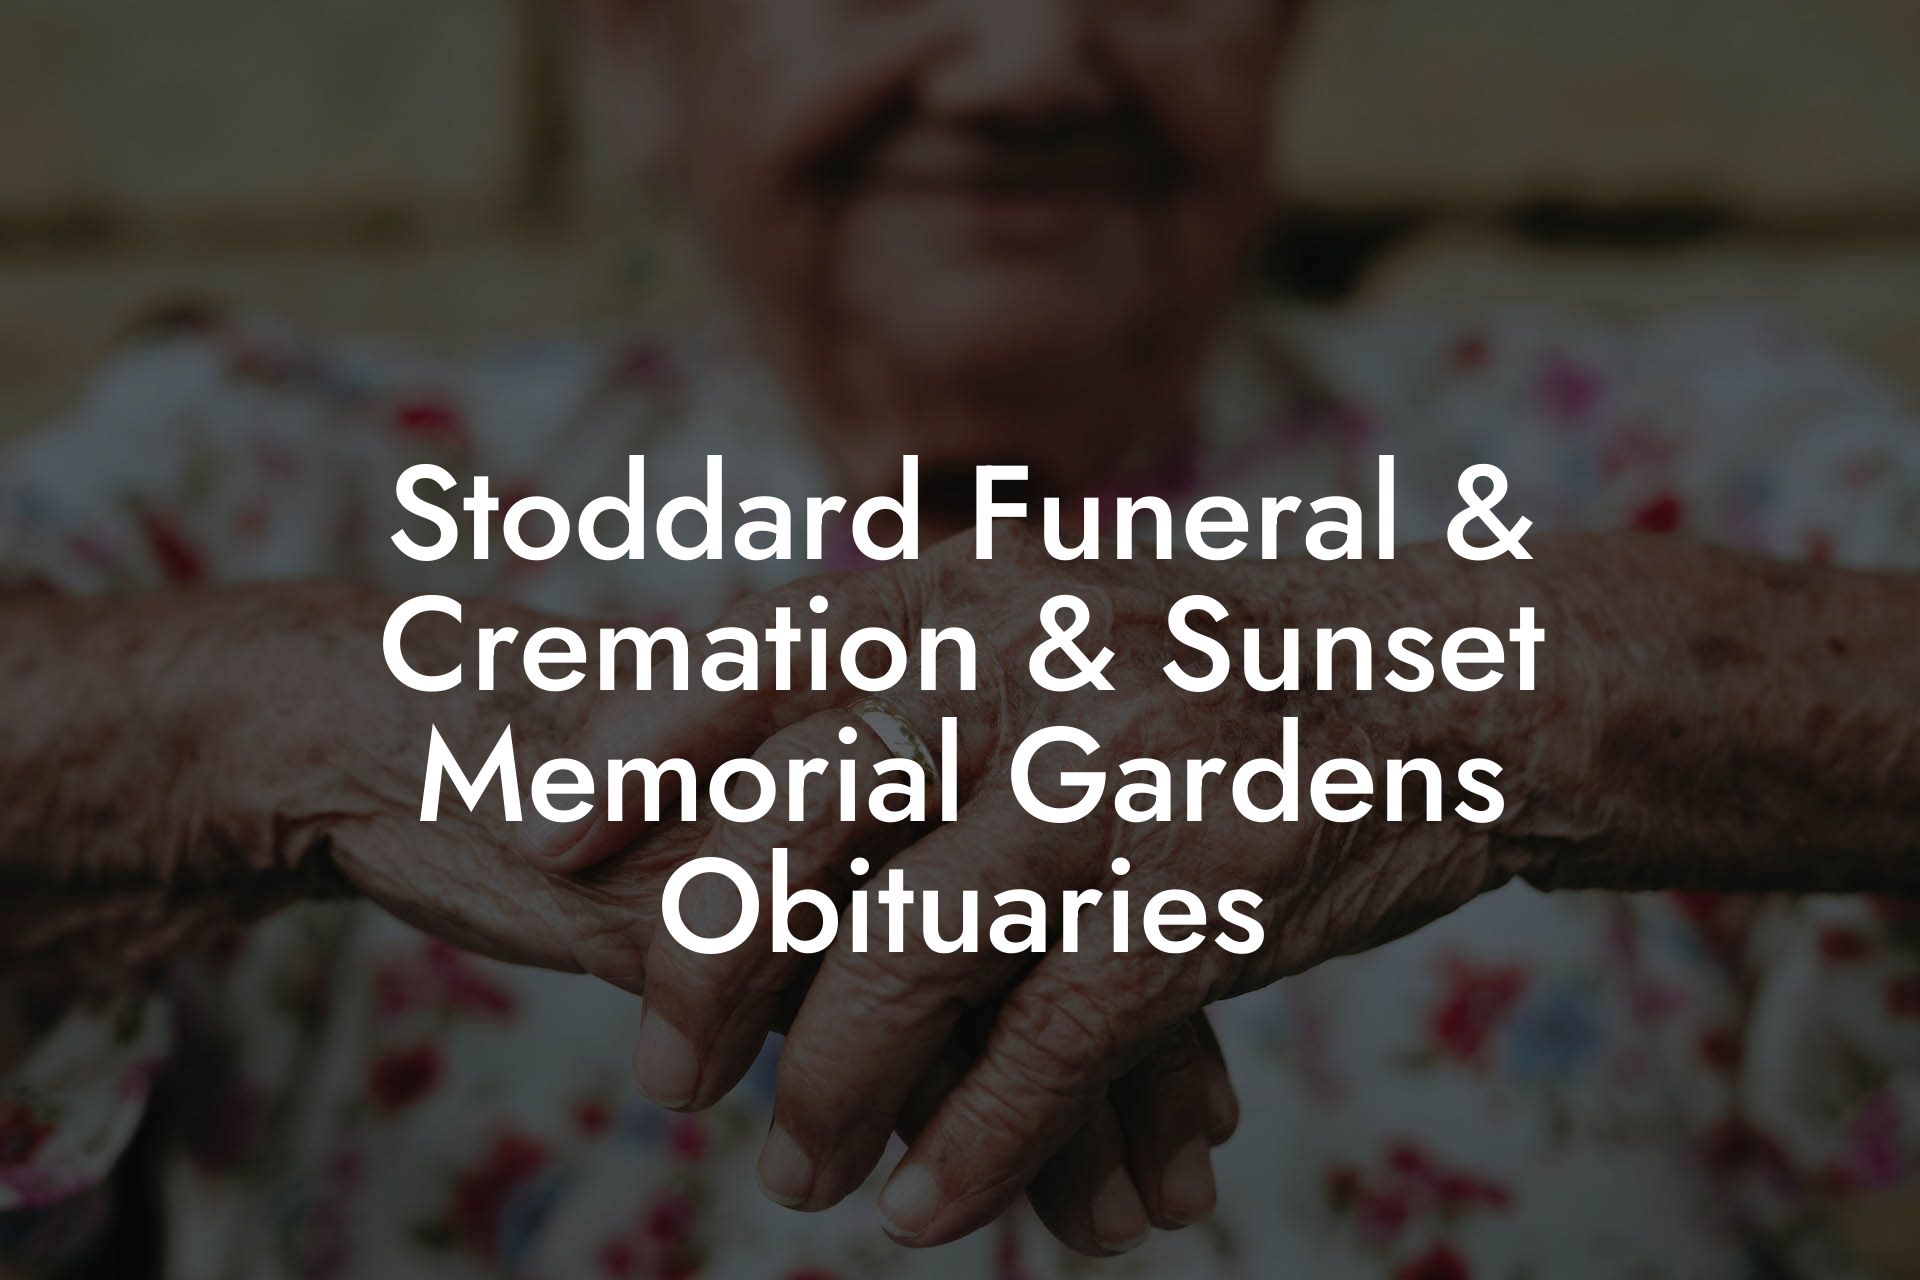 Stoddard Funeral & Cremation & Sunset Memorial Gardens Obituaries ...